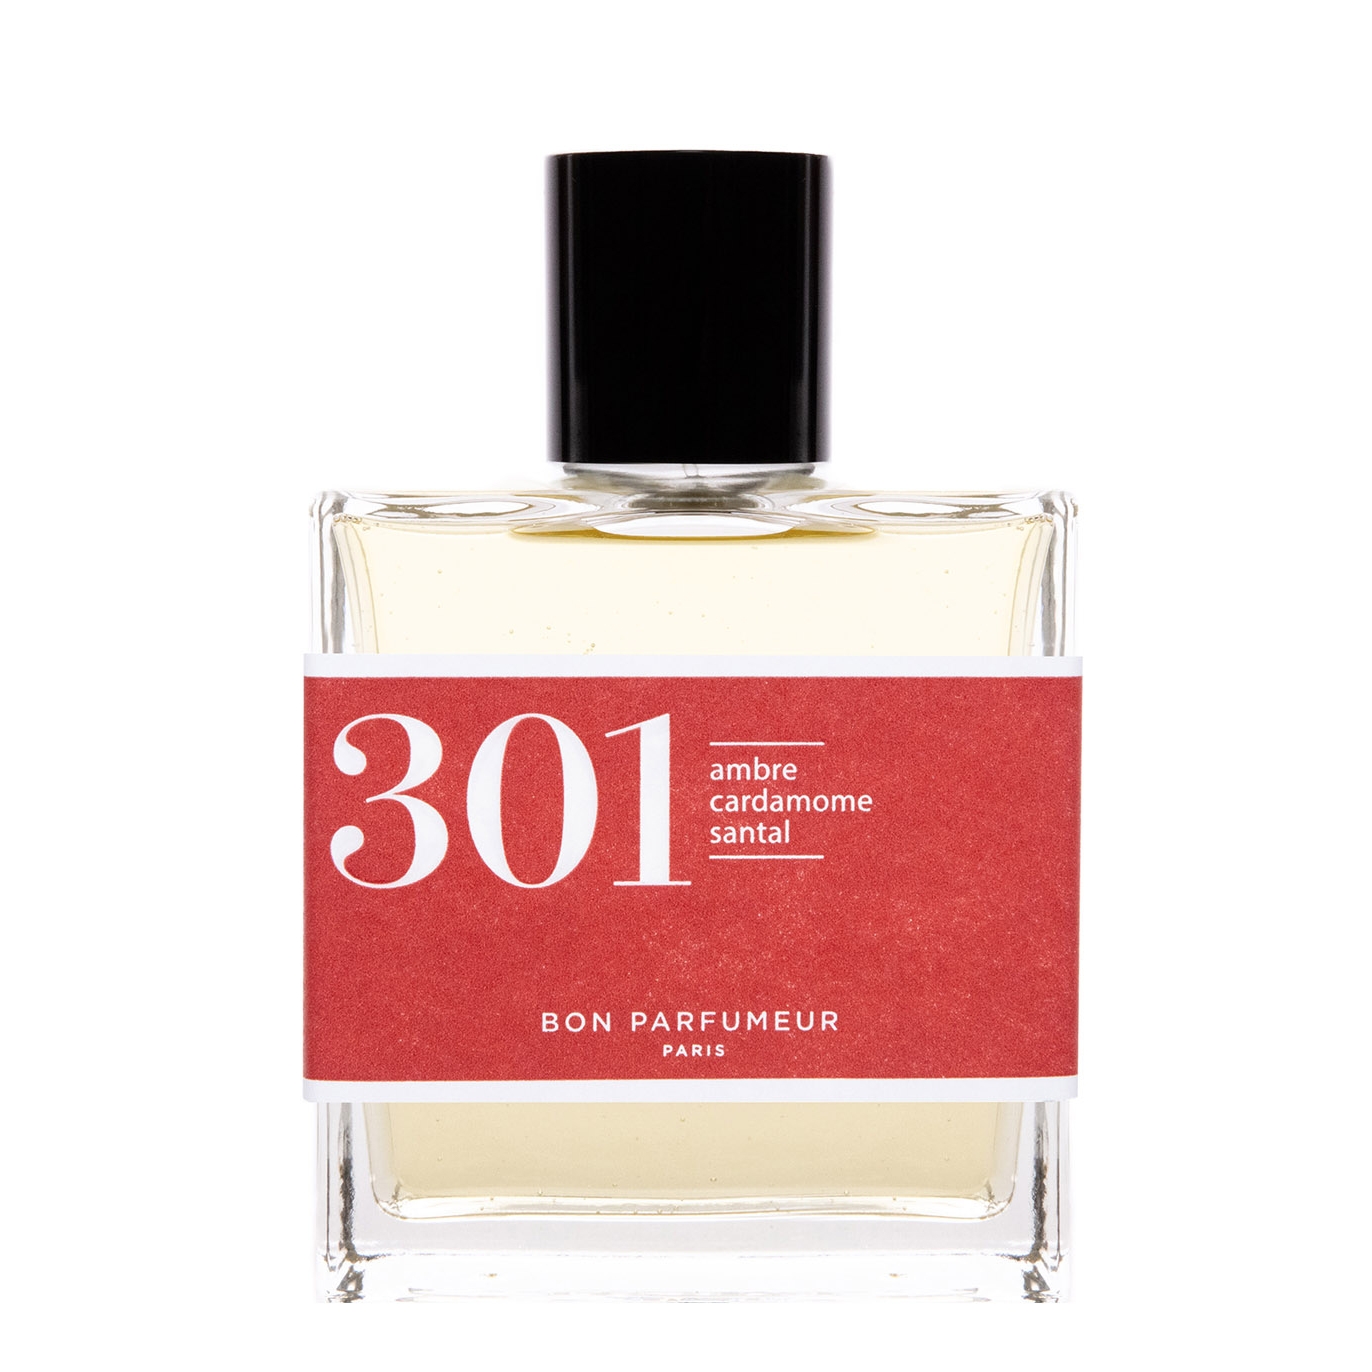 Bon Parfumeur 301 Sandalwood, Amber, Cardamom Eau De Parfum 100ml